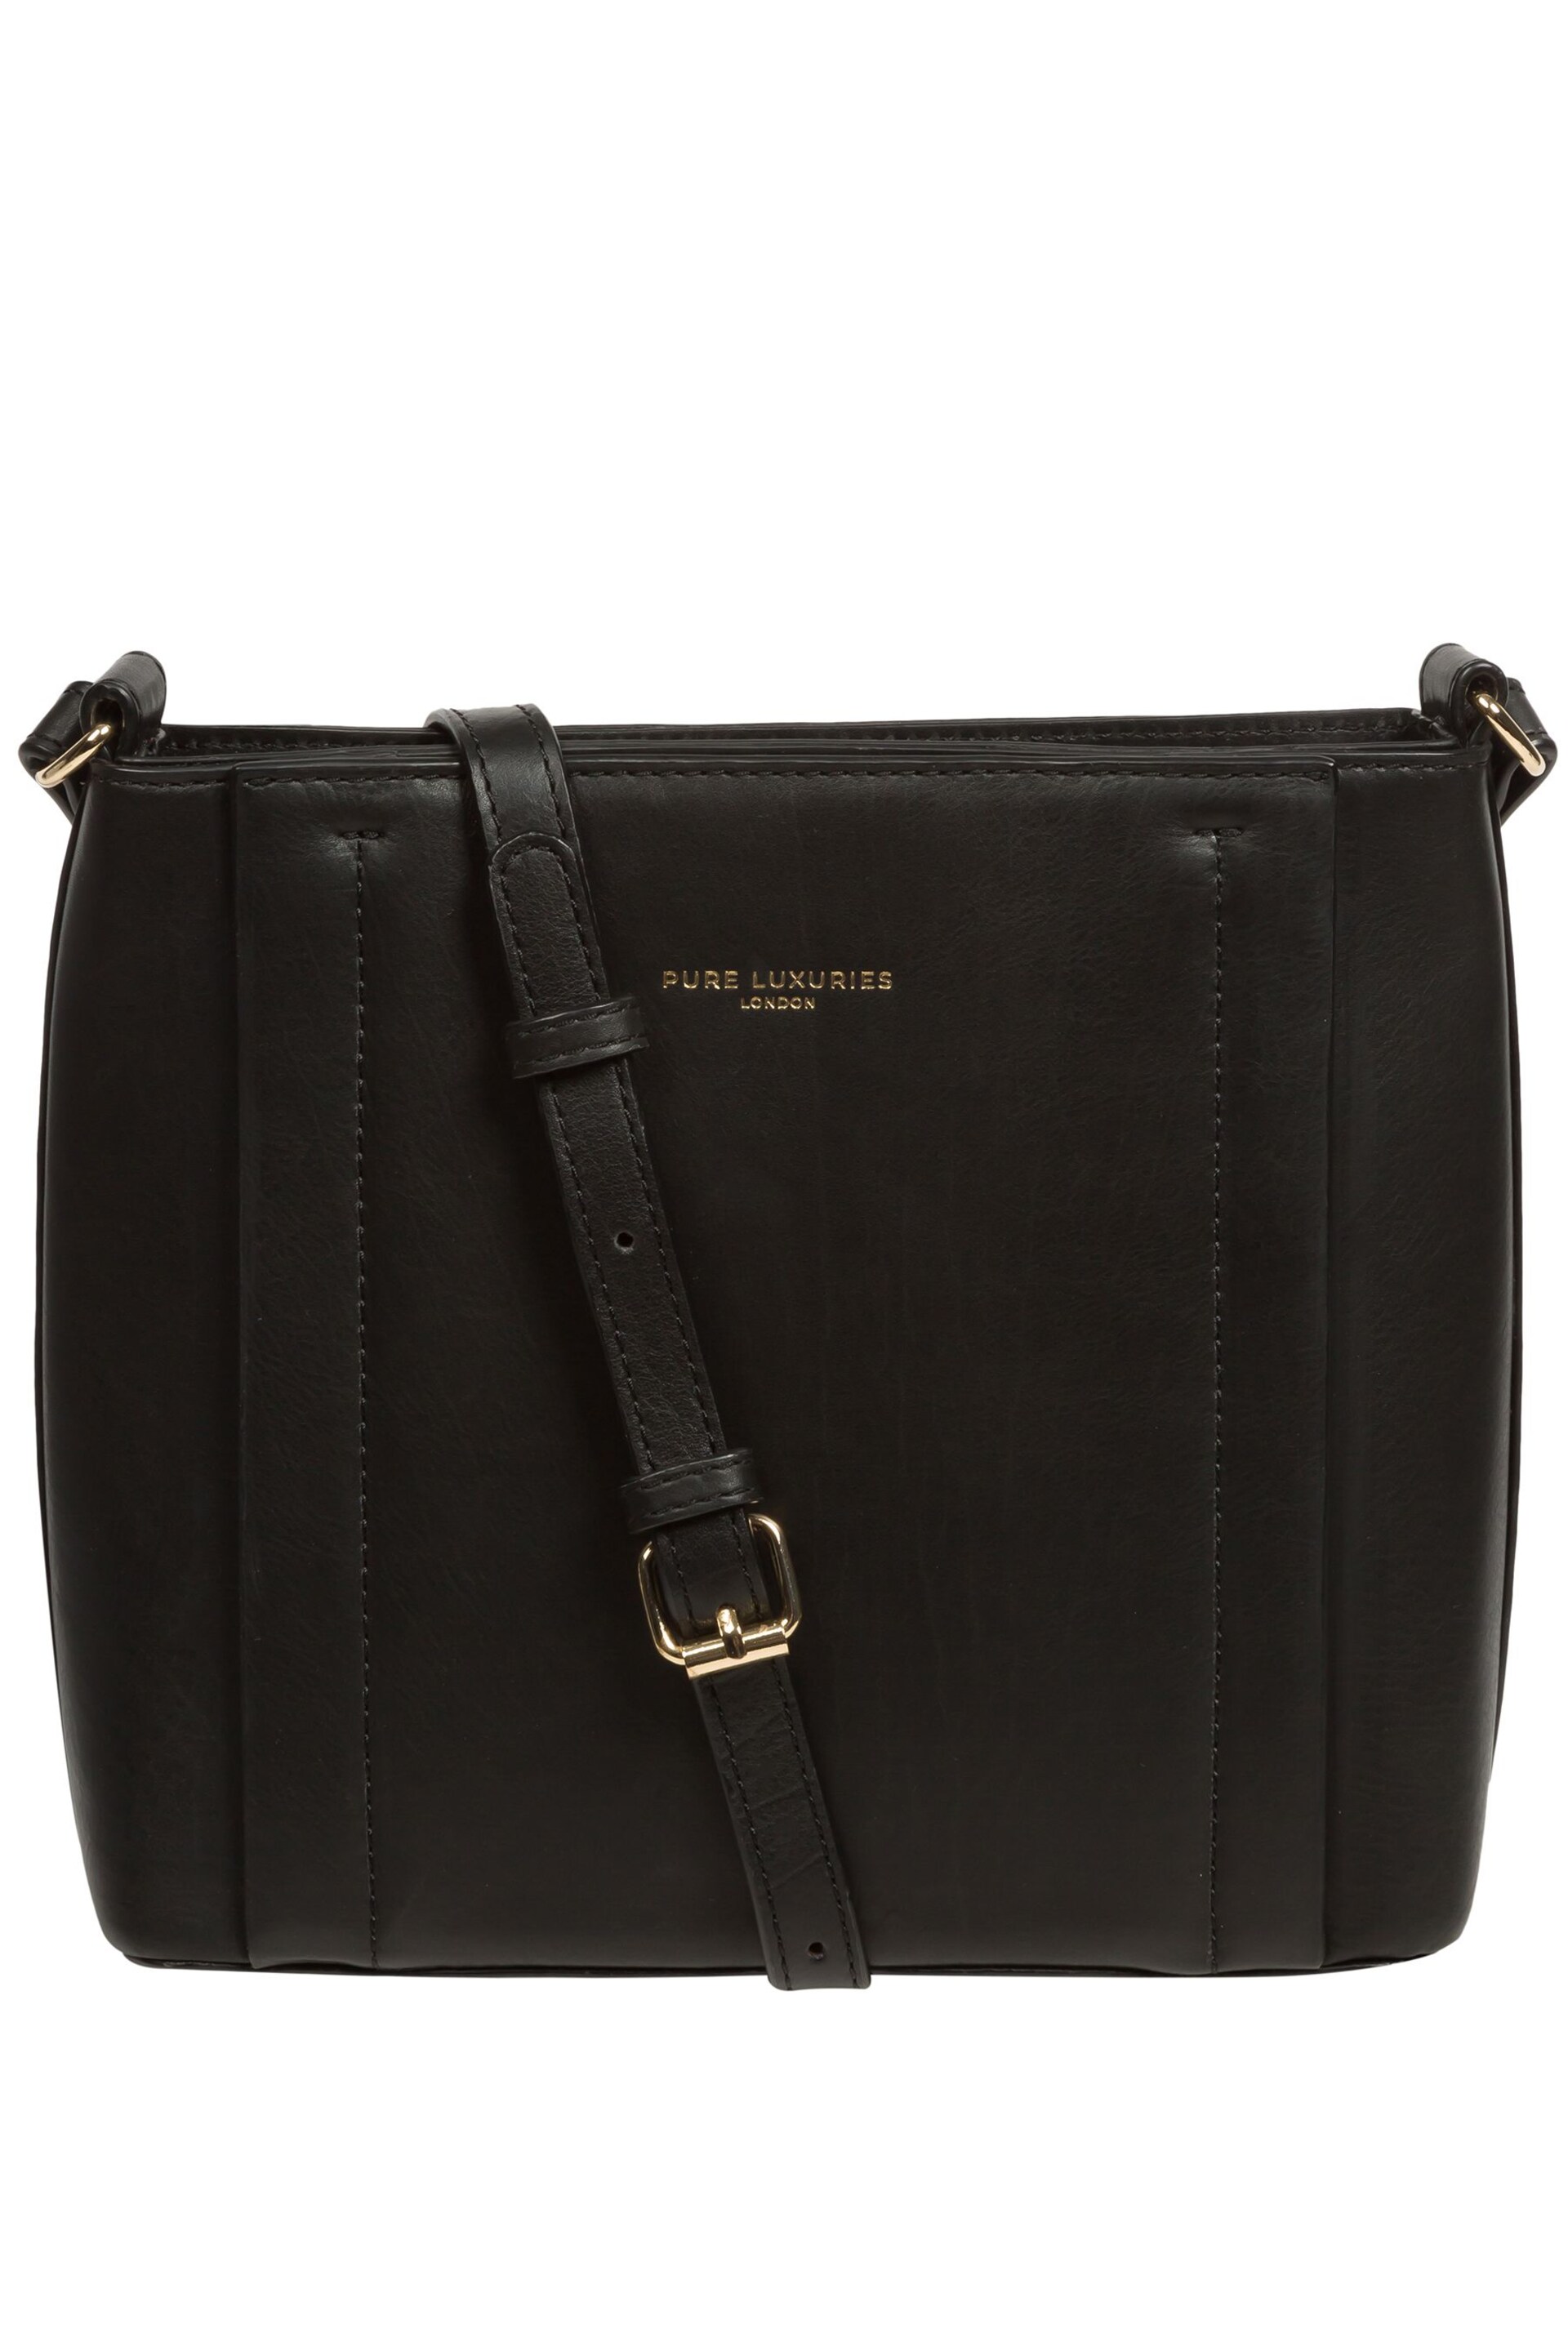 Pure Luxuries London Kali Nappa Leather Cross-Body Bag - Image 1 of 1